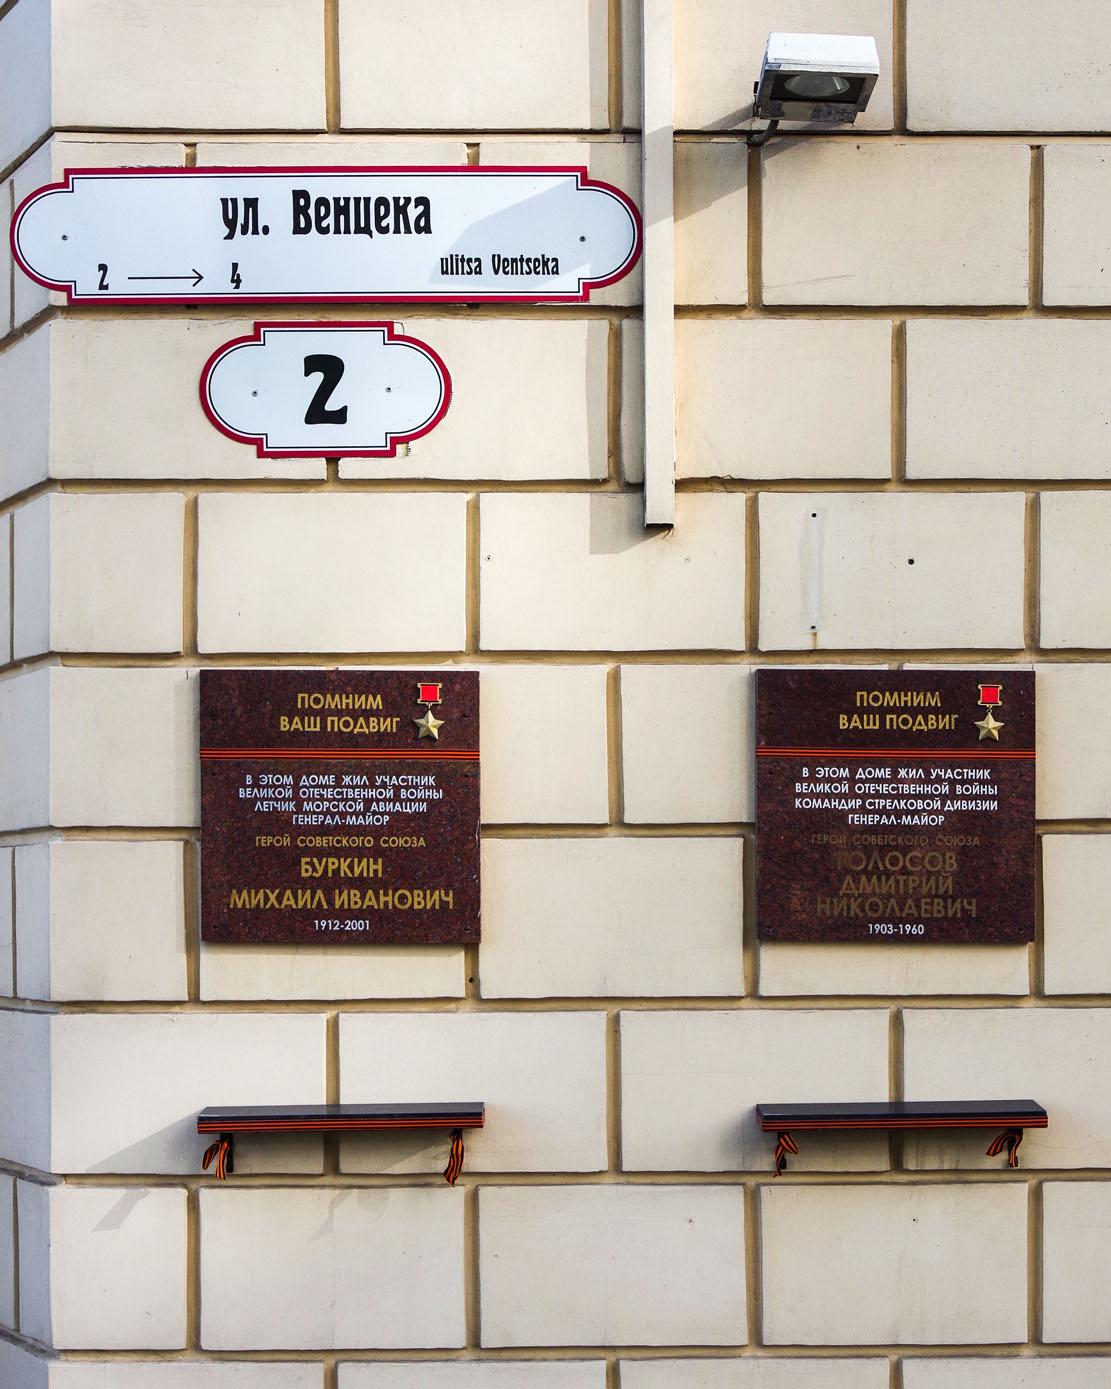 Samara, Улица Максима Горького, 103 / Улица Венцека, 2. Samara — Memorial plaques